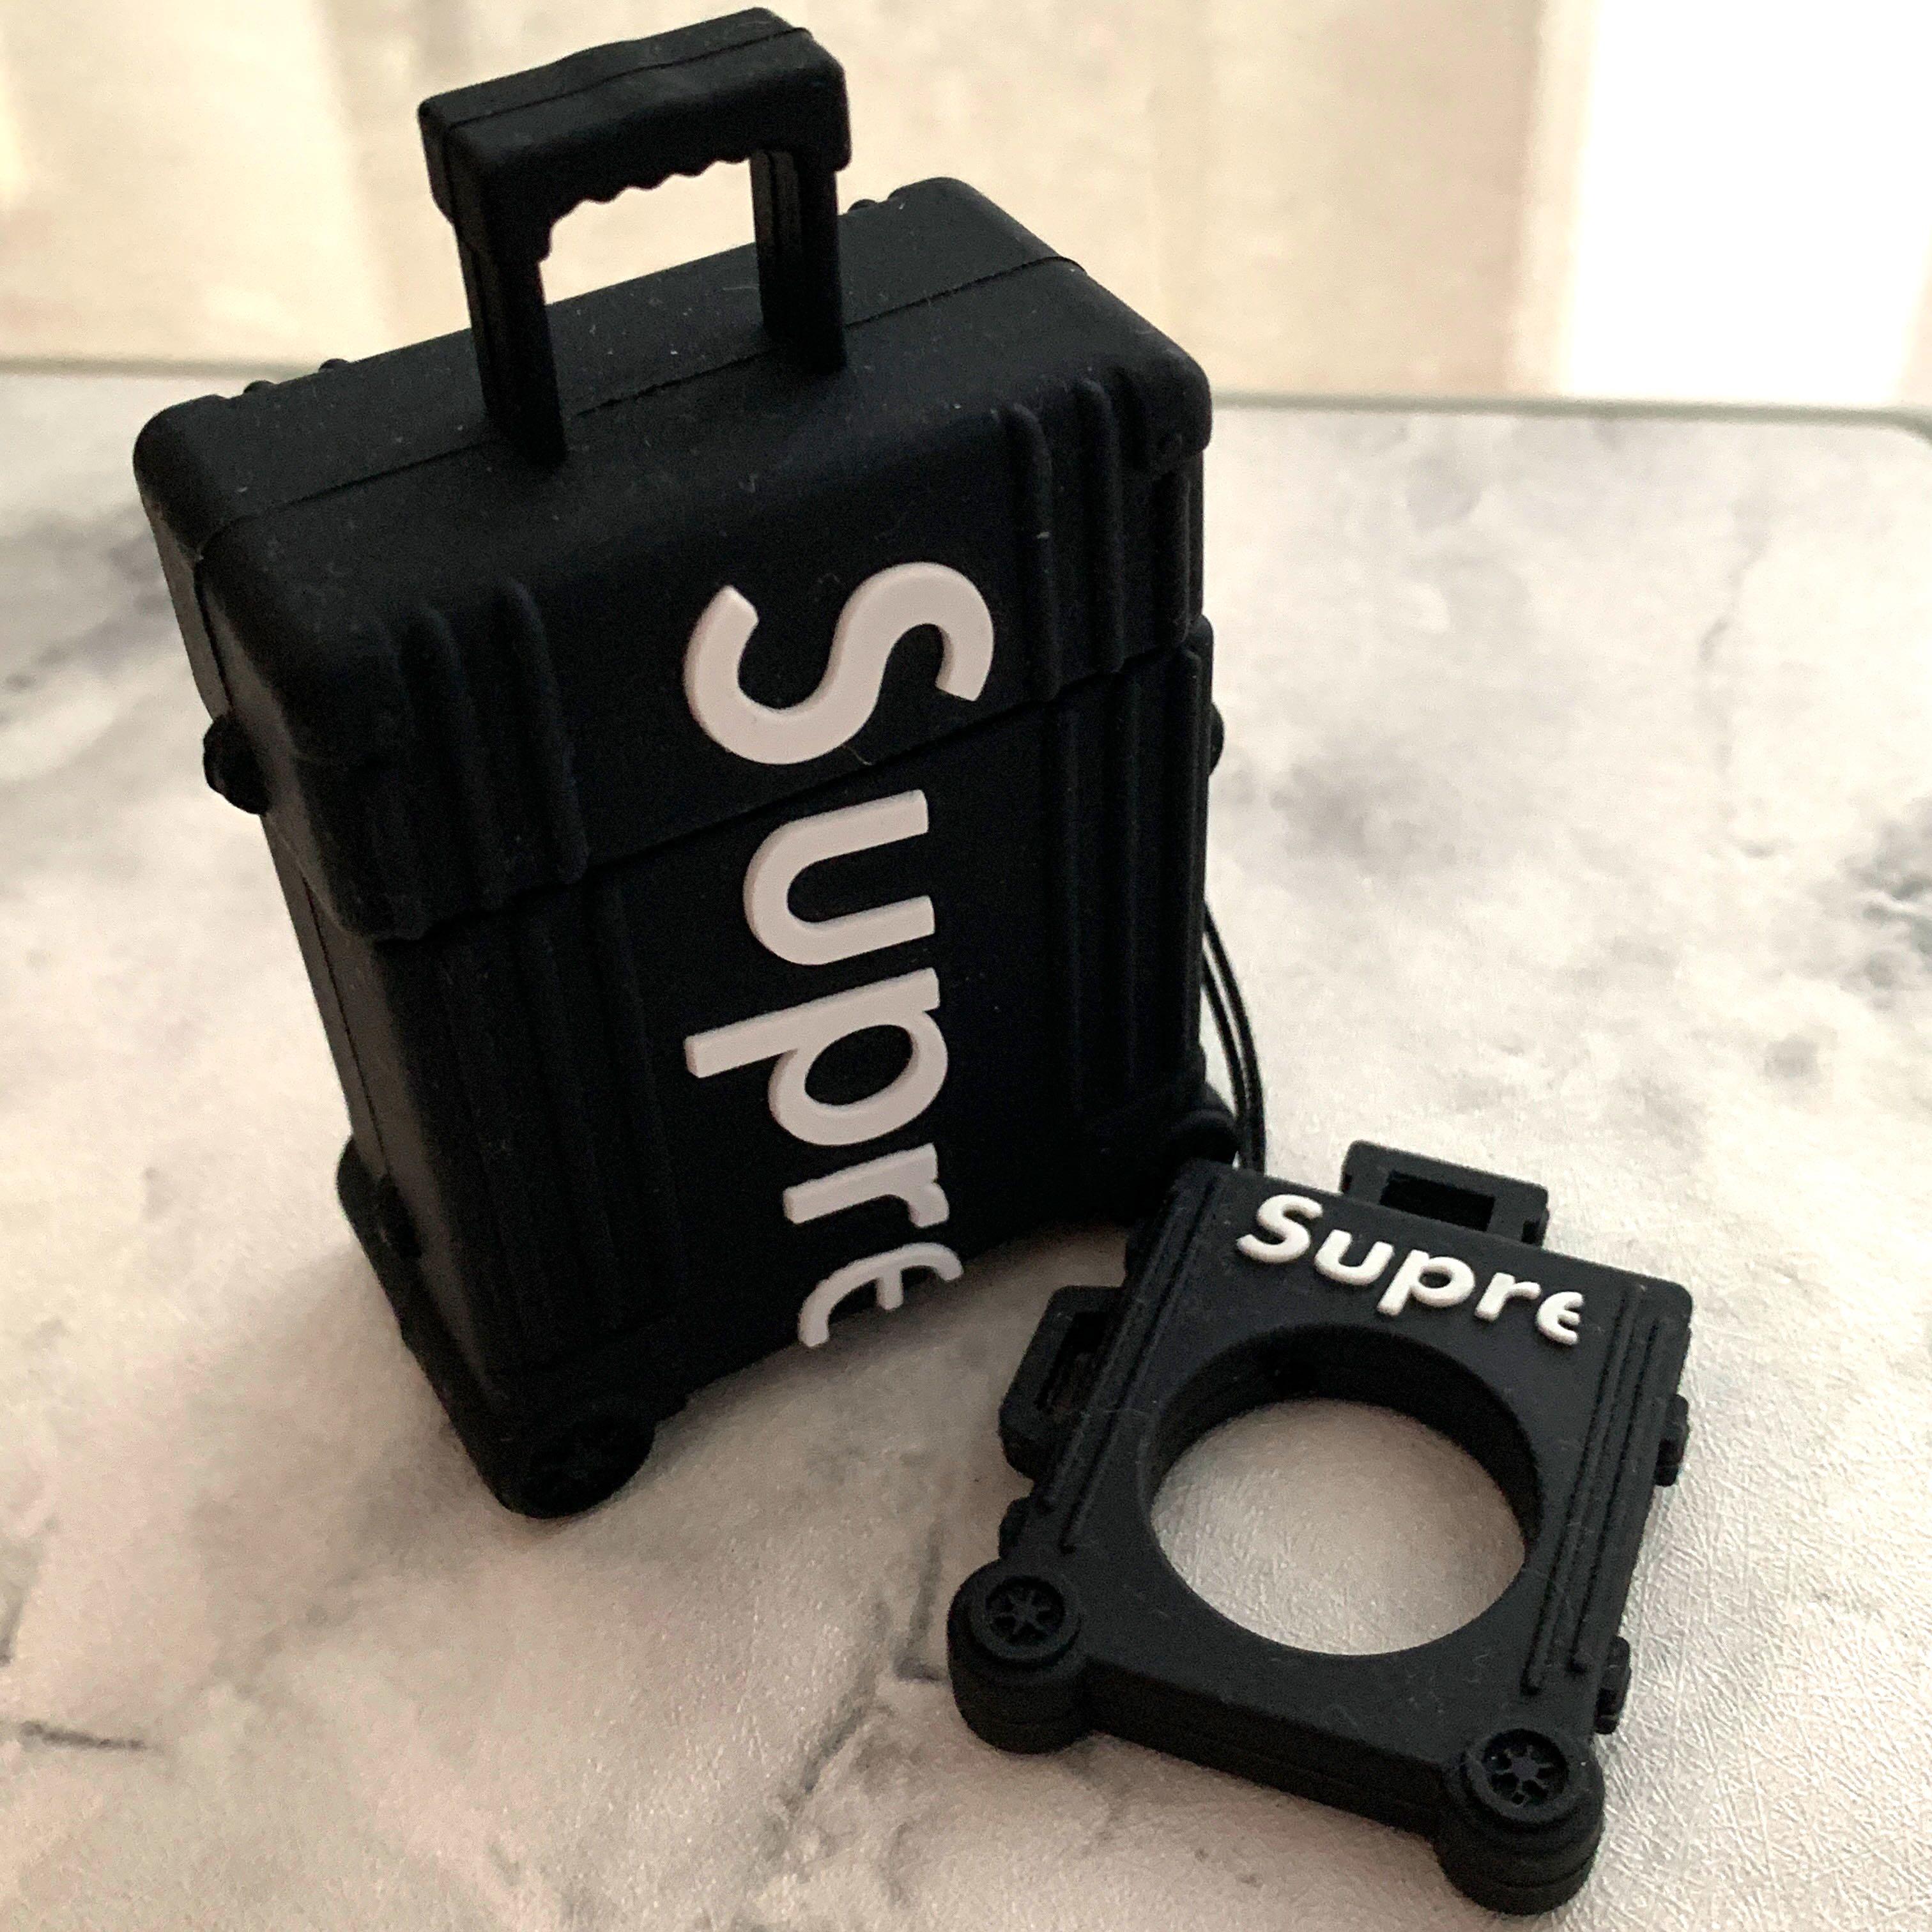 Supreme Suitcase AirPods Case